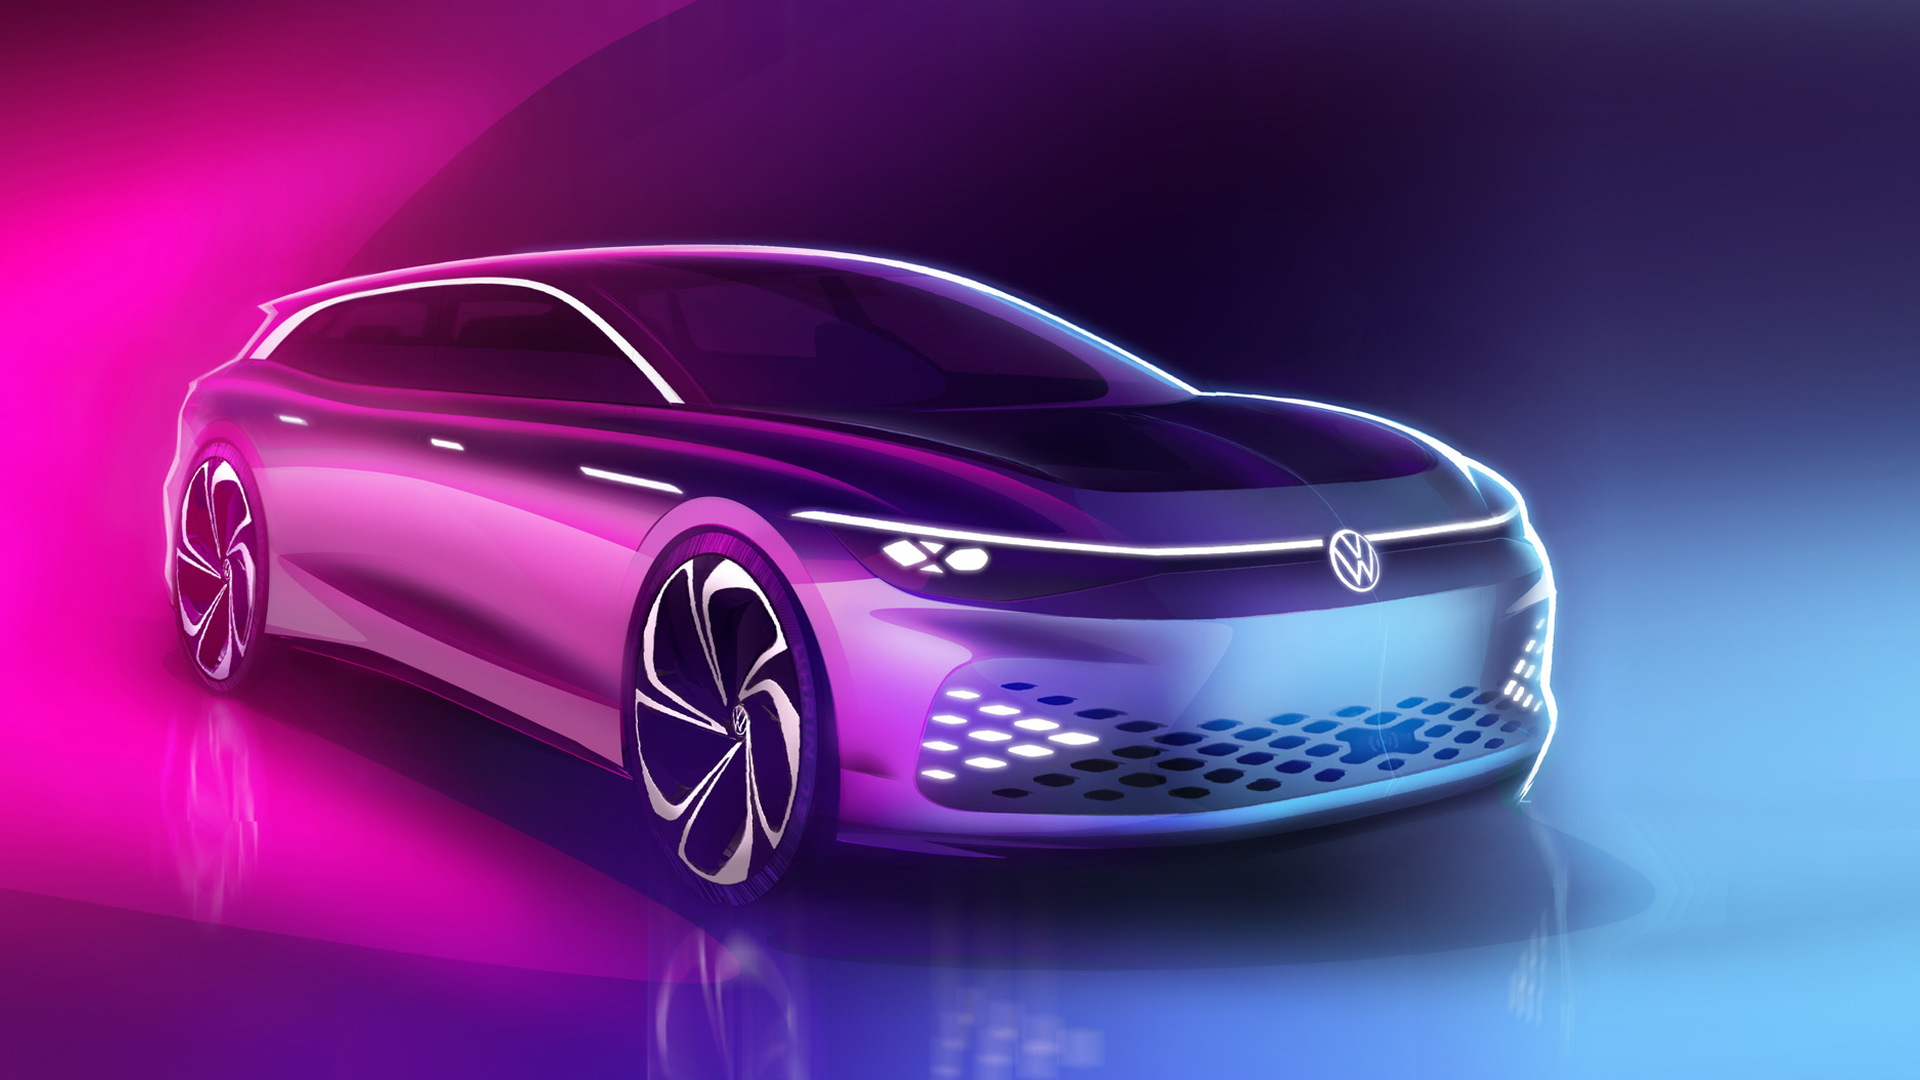 Teaser for Volkswagen ID Space Vizzion concept debuting on November 19, 2019